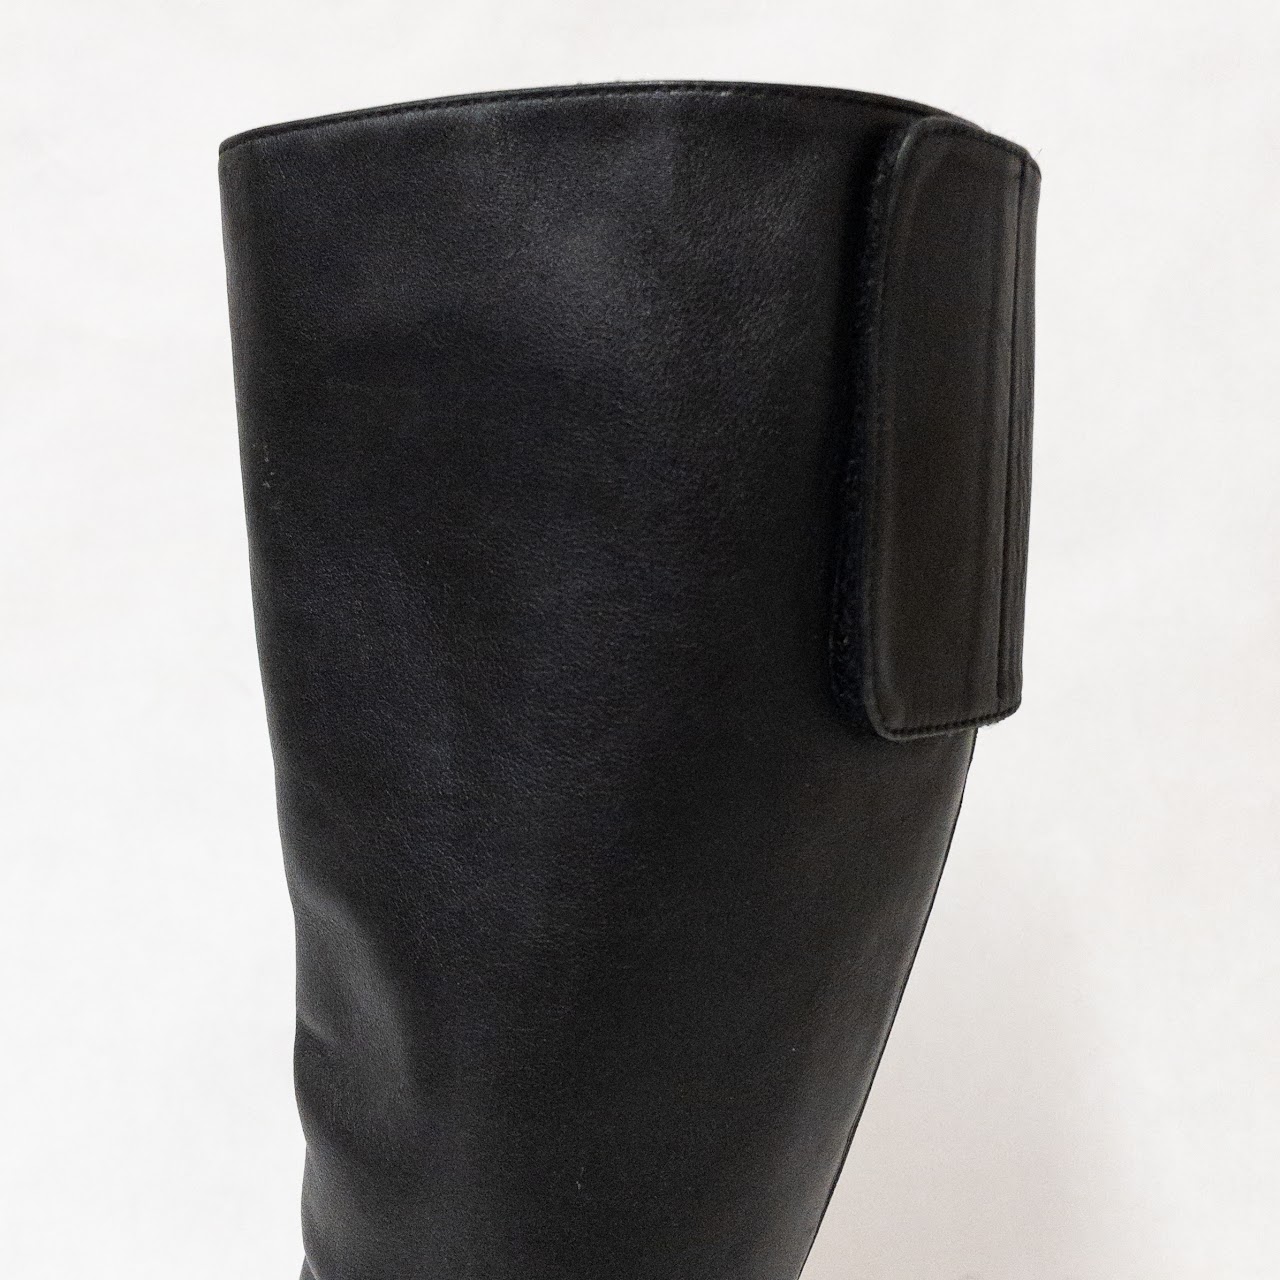 Prada Leather Tall Shaft Boots